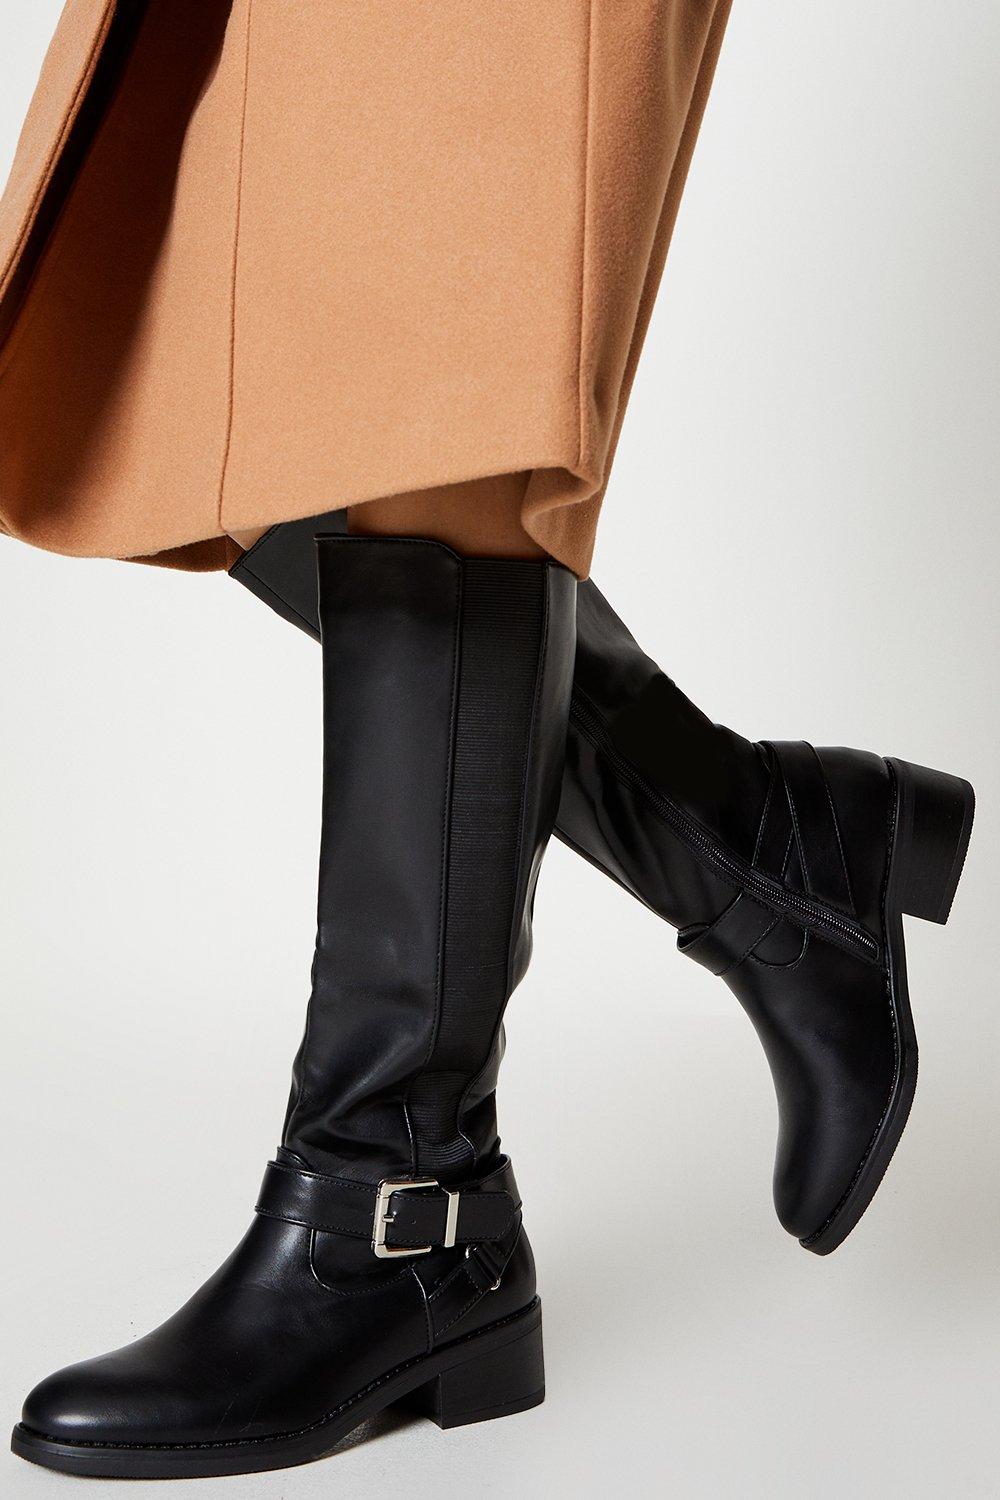 Women’s Kendra Knee High Buckle Boots - black - 3